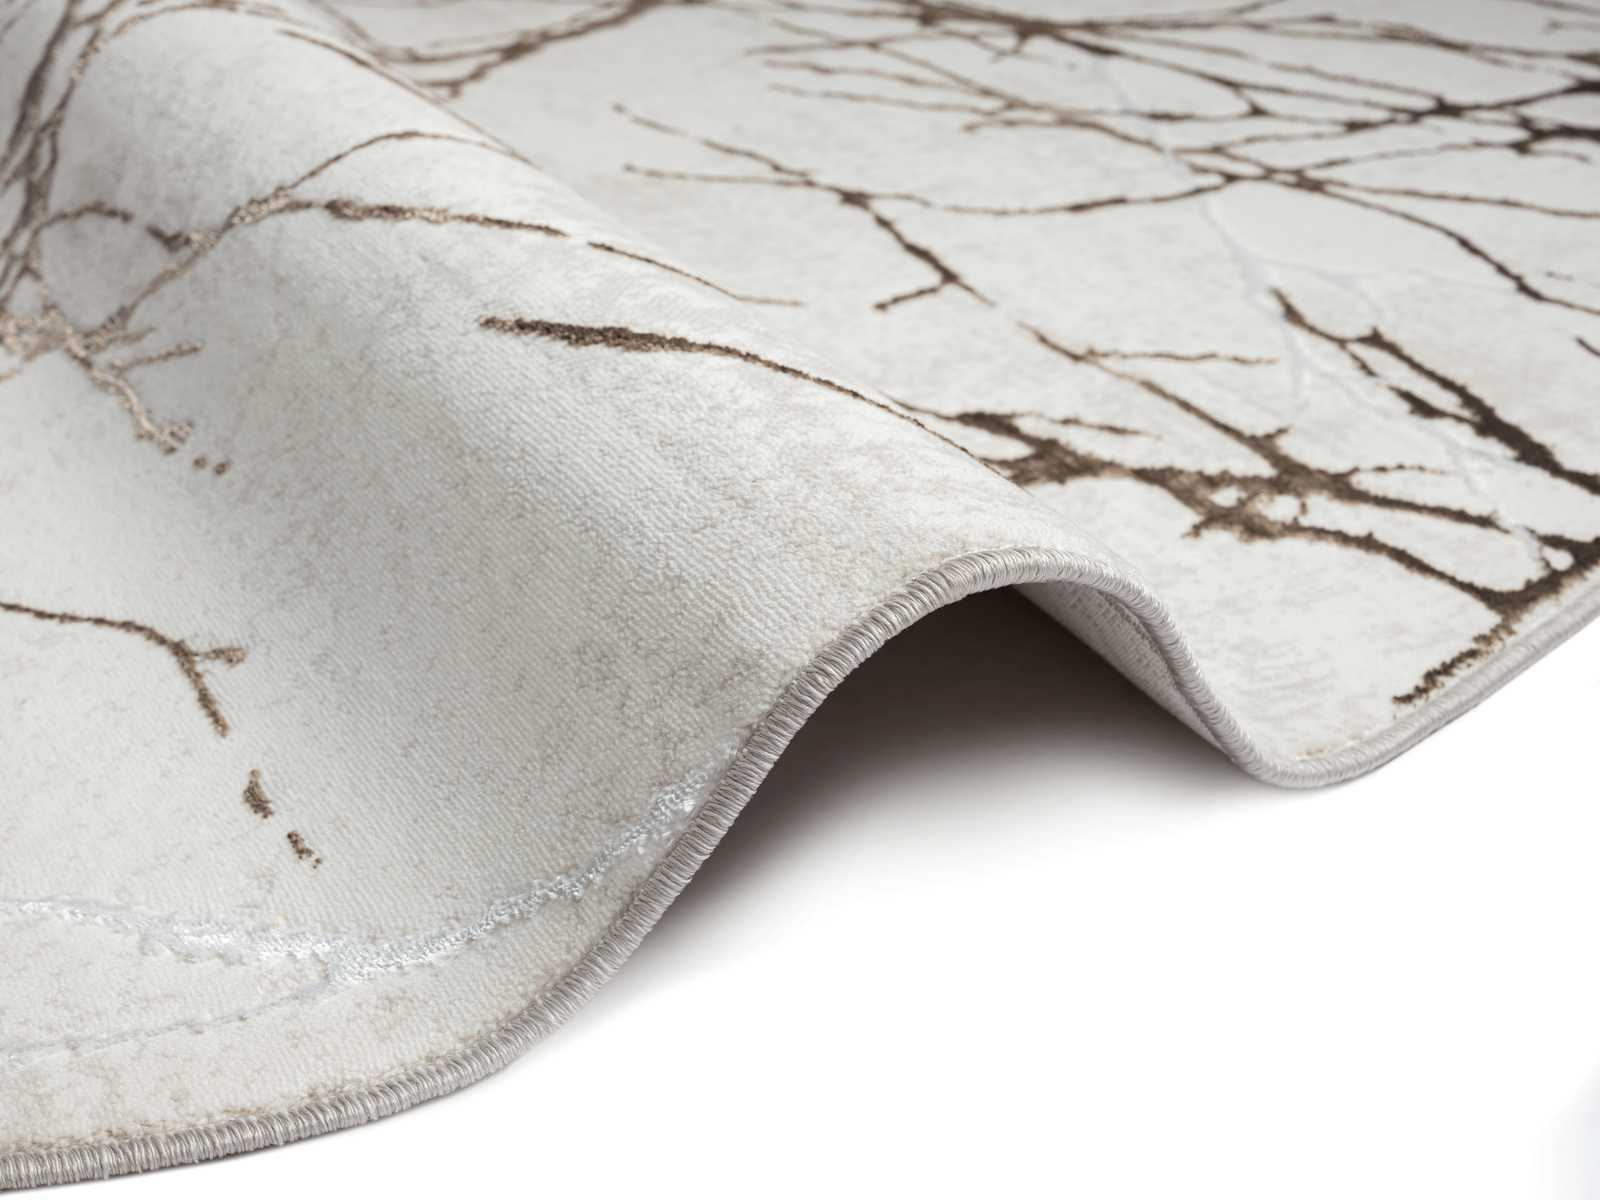             Fluffy high pile carpet in cream - 200 x 140 cm
        